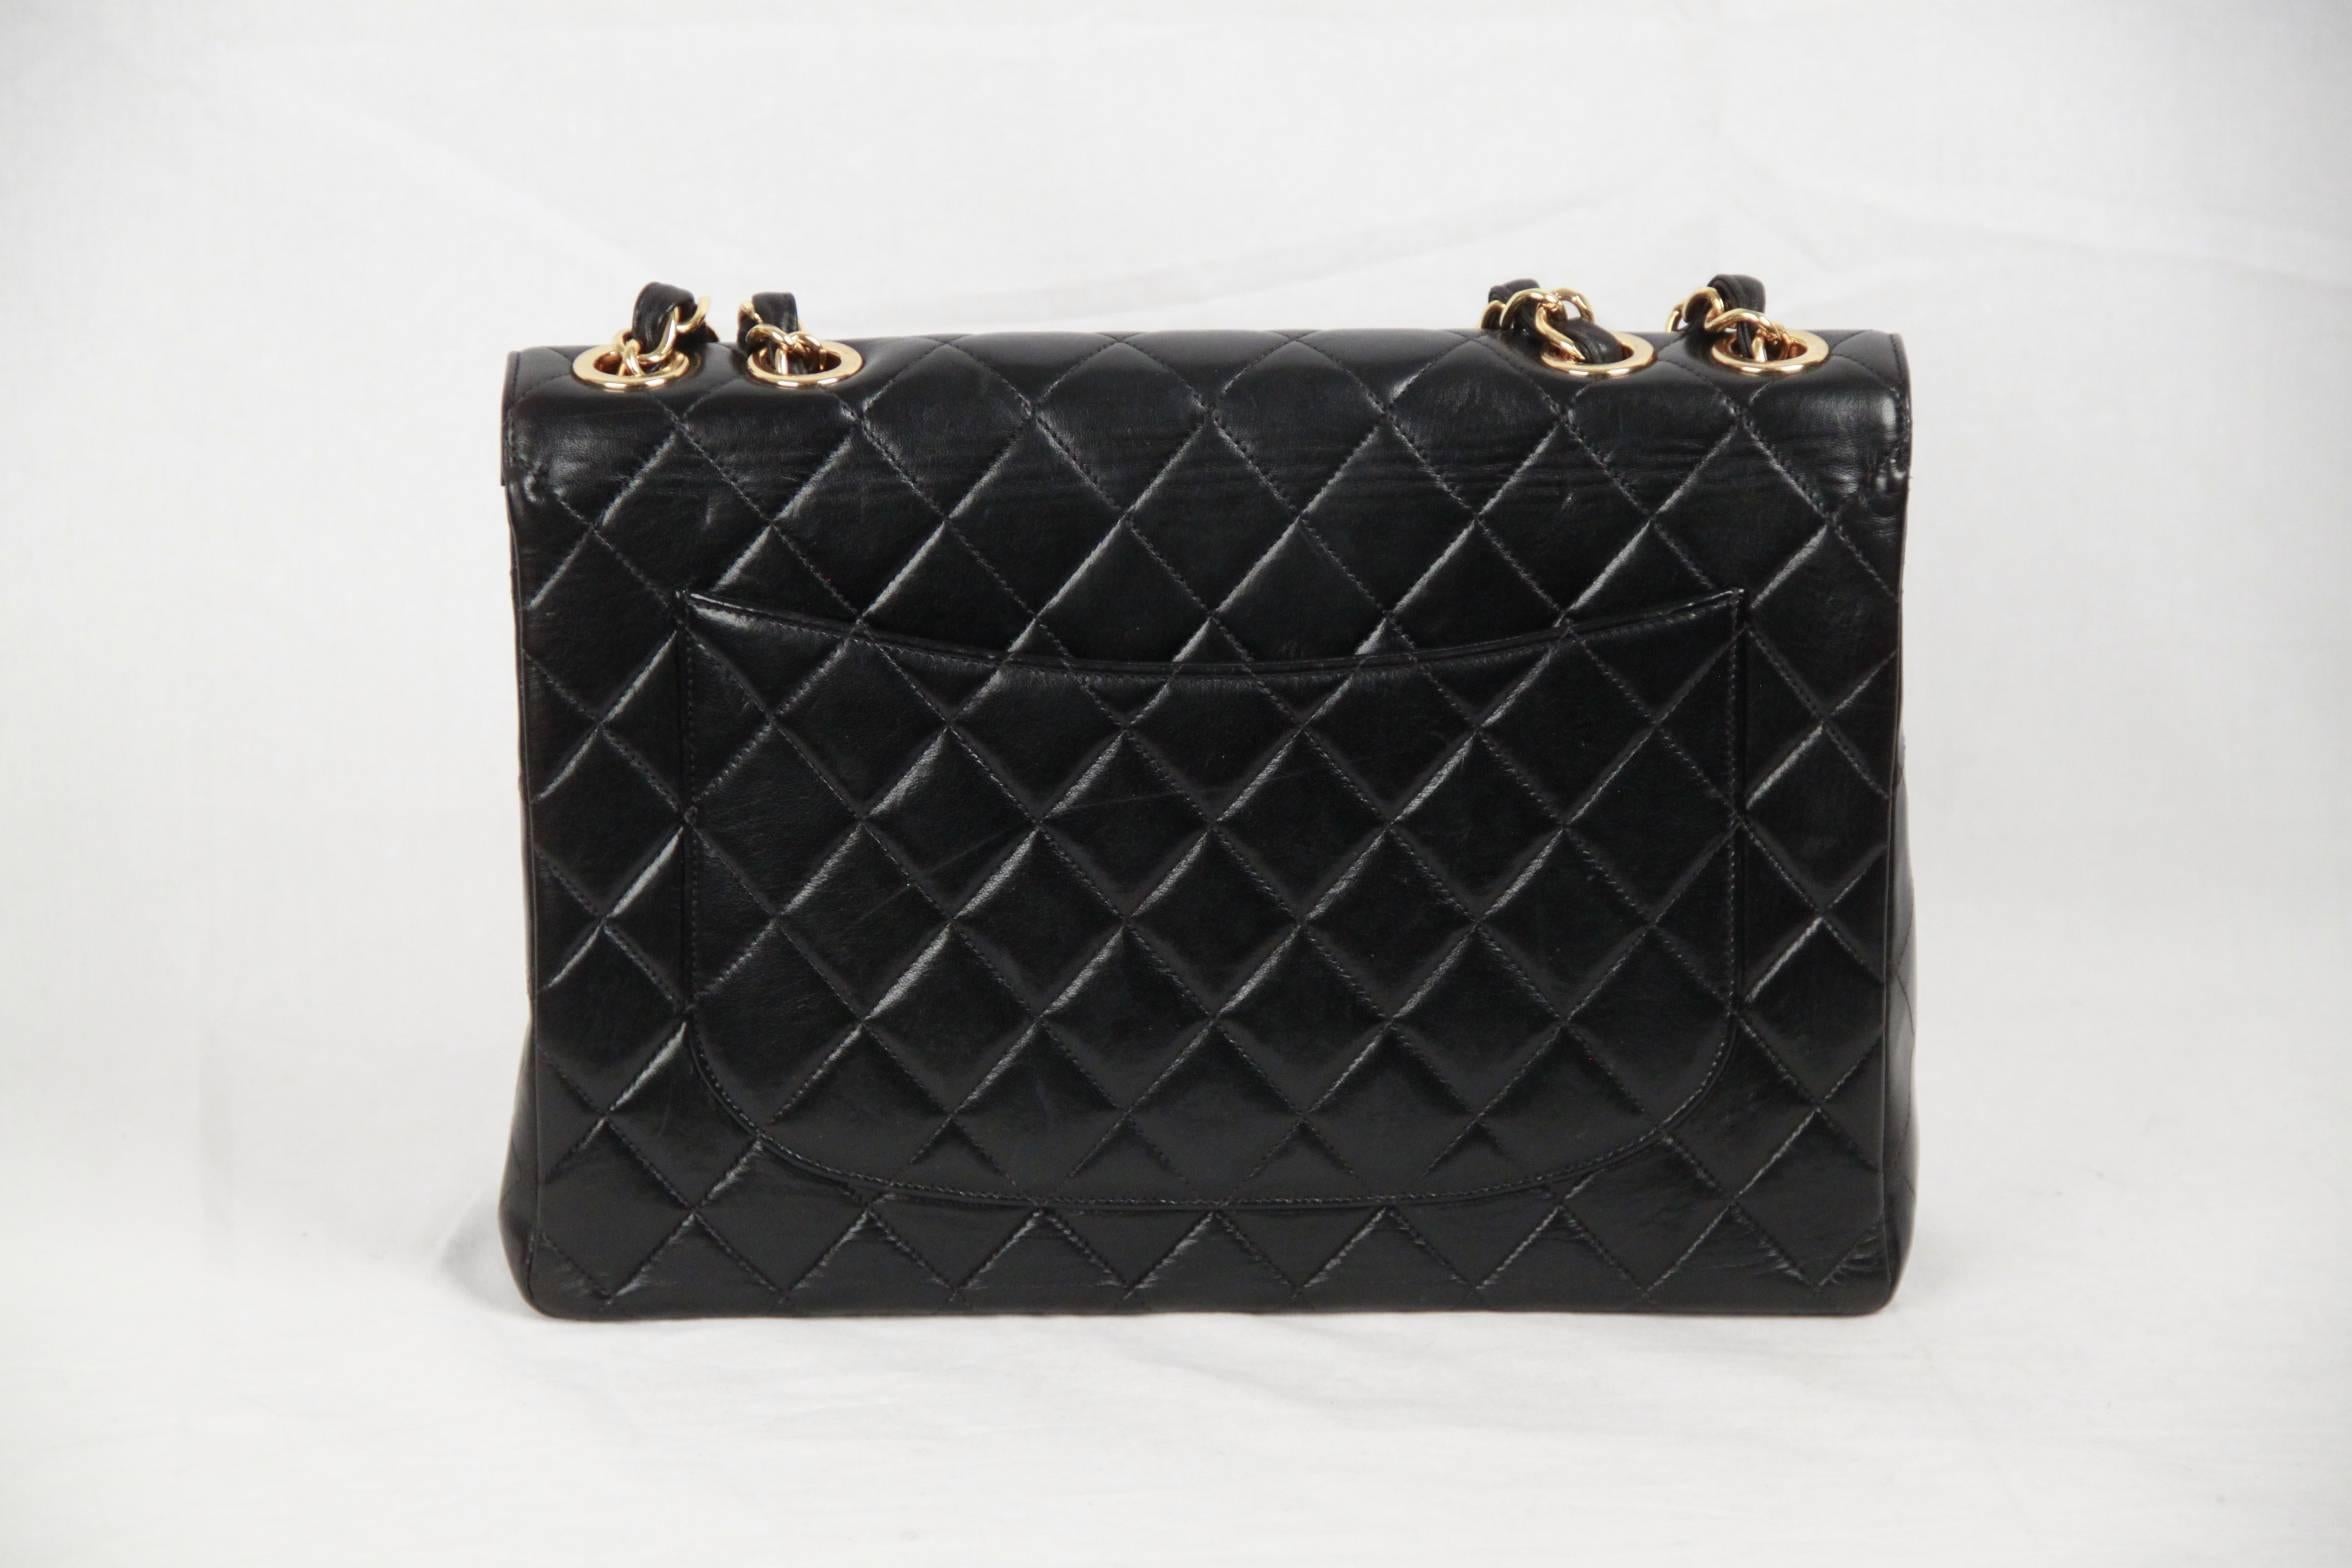 CHANEL Vintage Black QUILTED Leather JUMBO CLASSIC FLAP Shoulder Bag 1